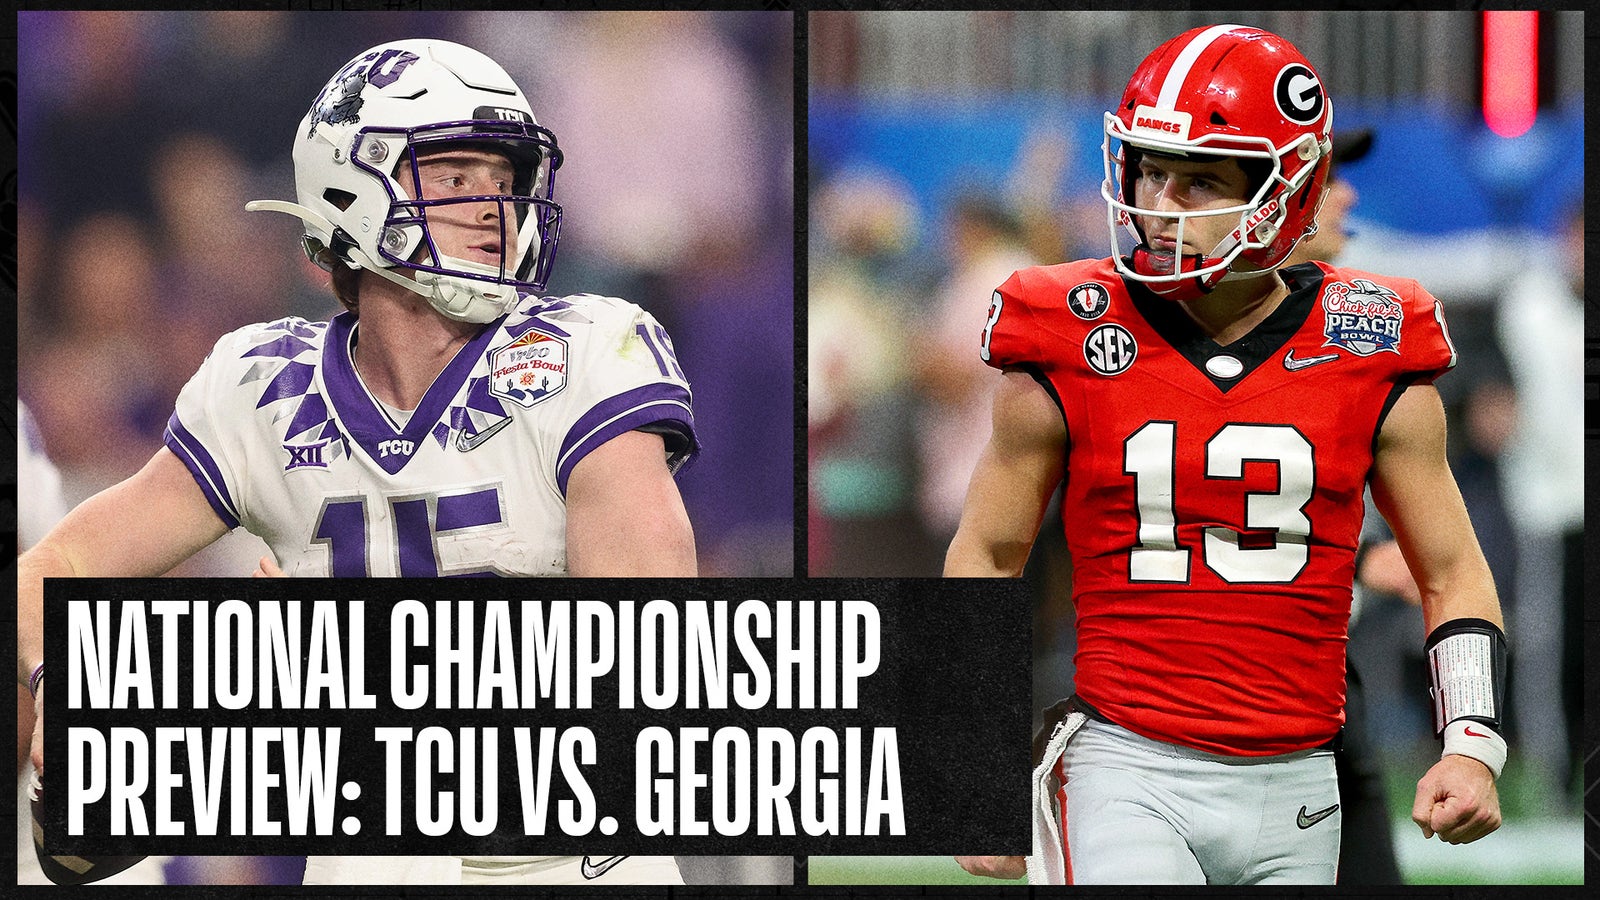 National Championship Preview: Georgia vs. TCU